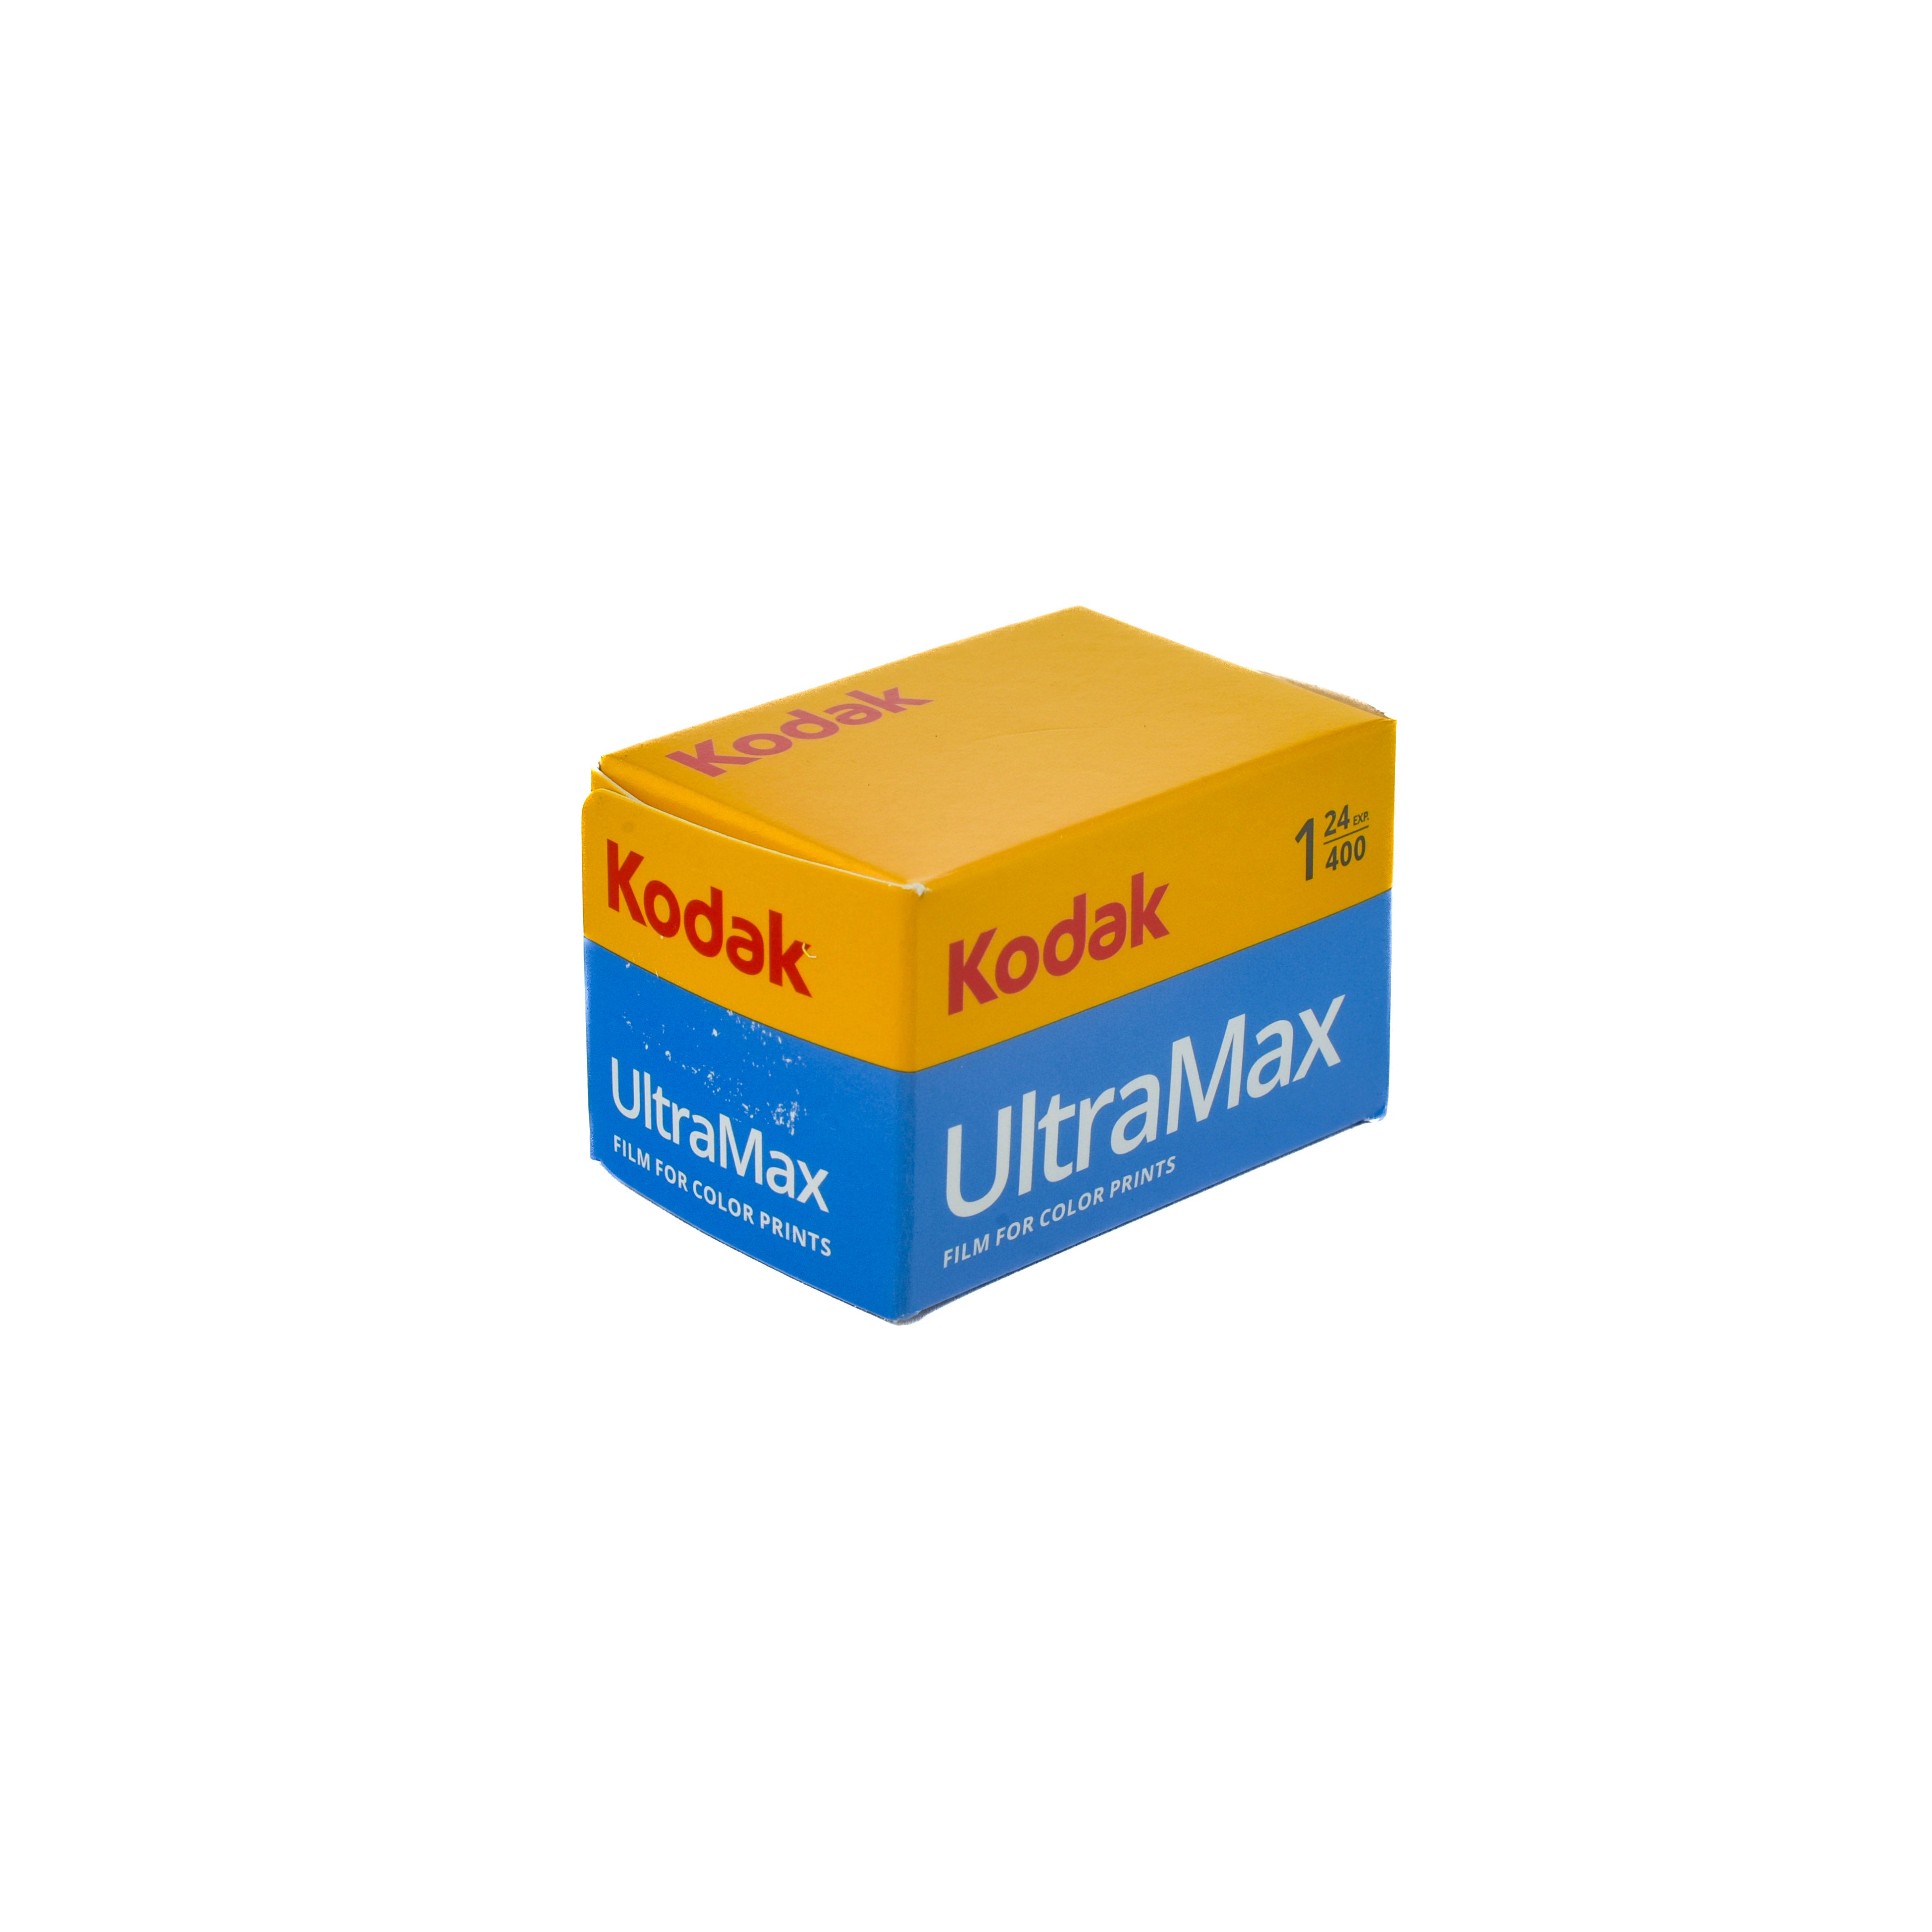 Kodak Ultramax 400 35mm Colour Film (24 exposures)